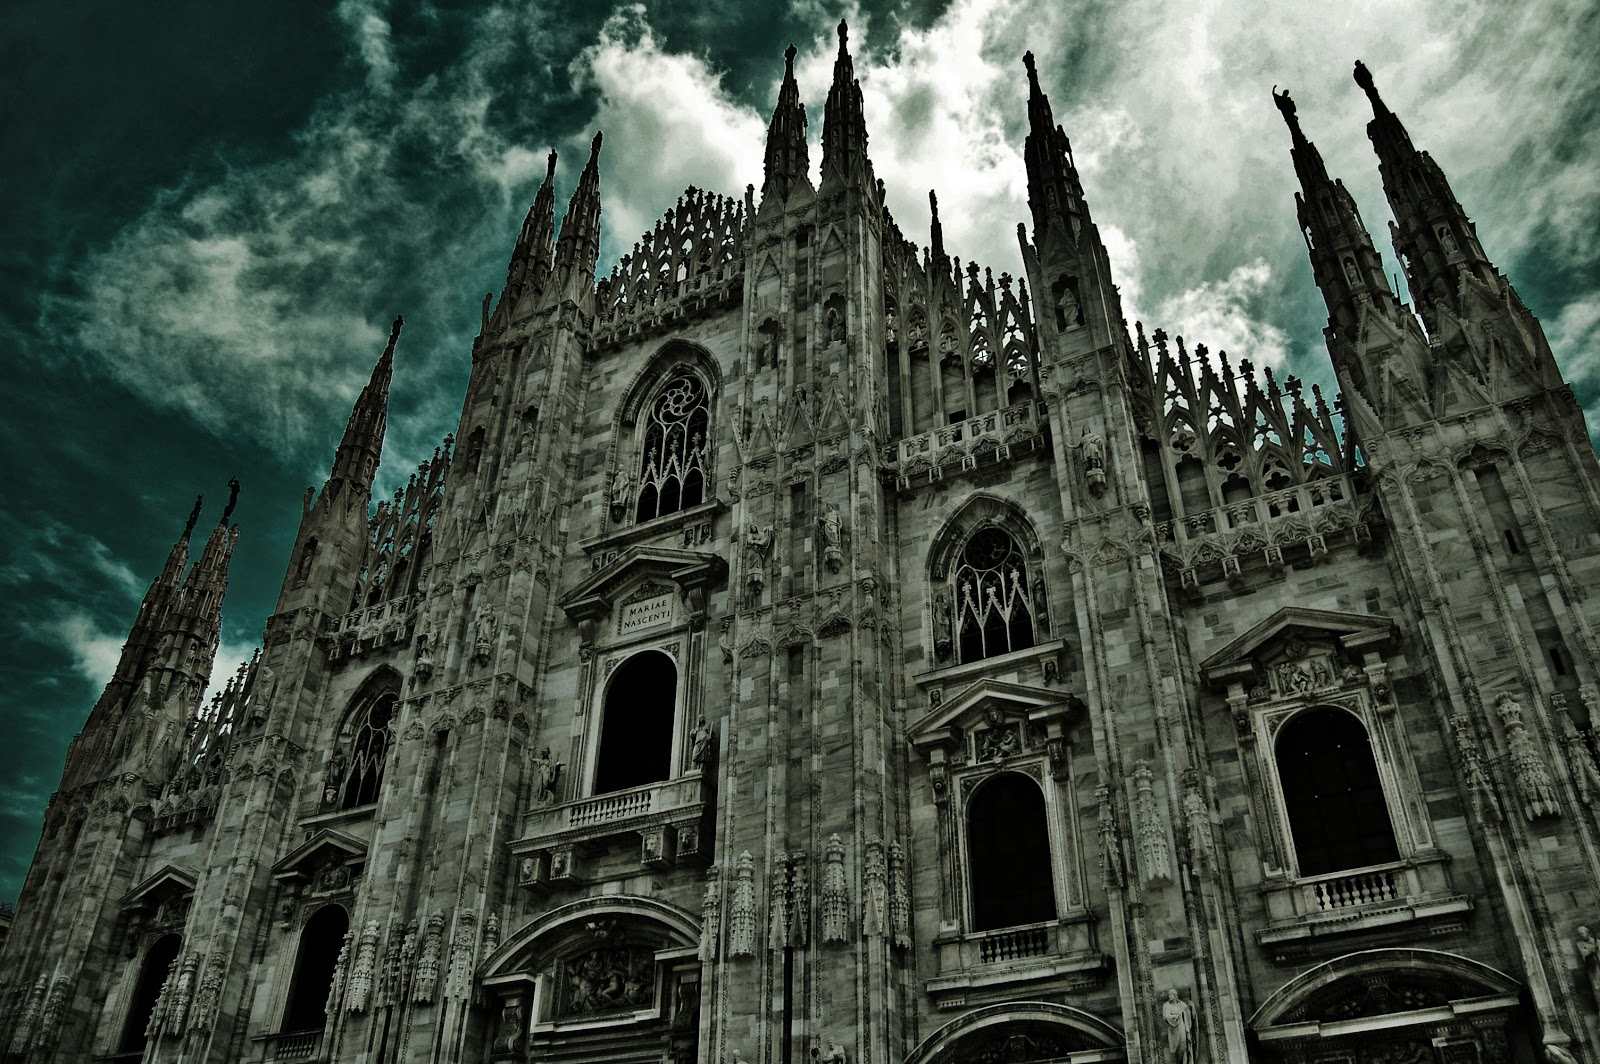 The Center of Milan